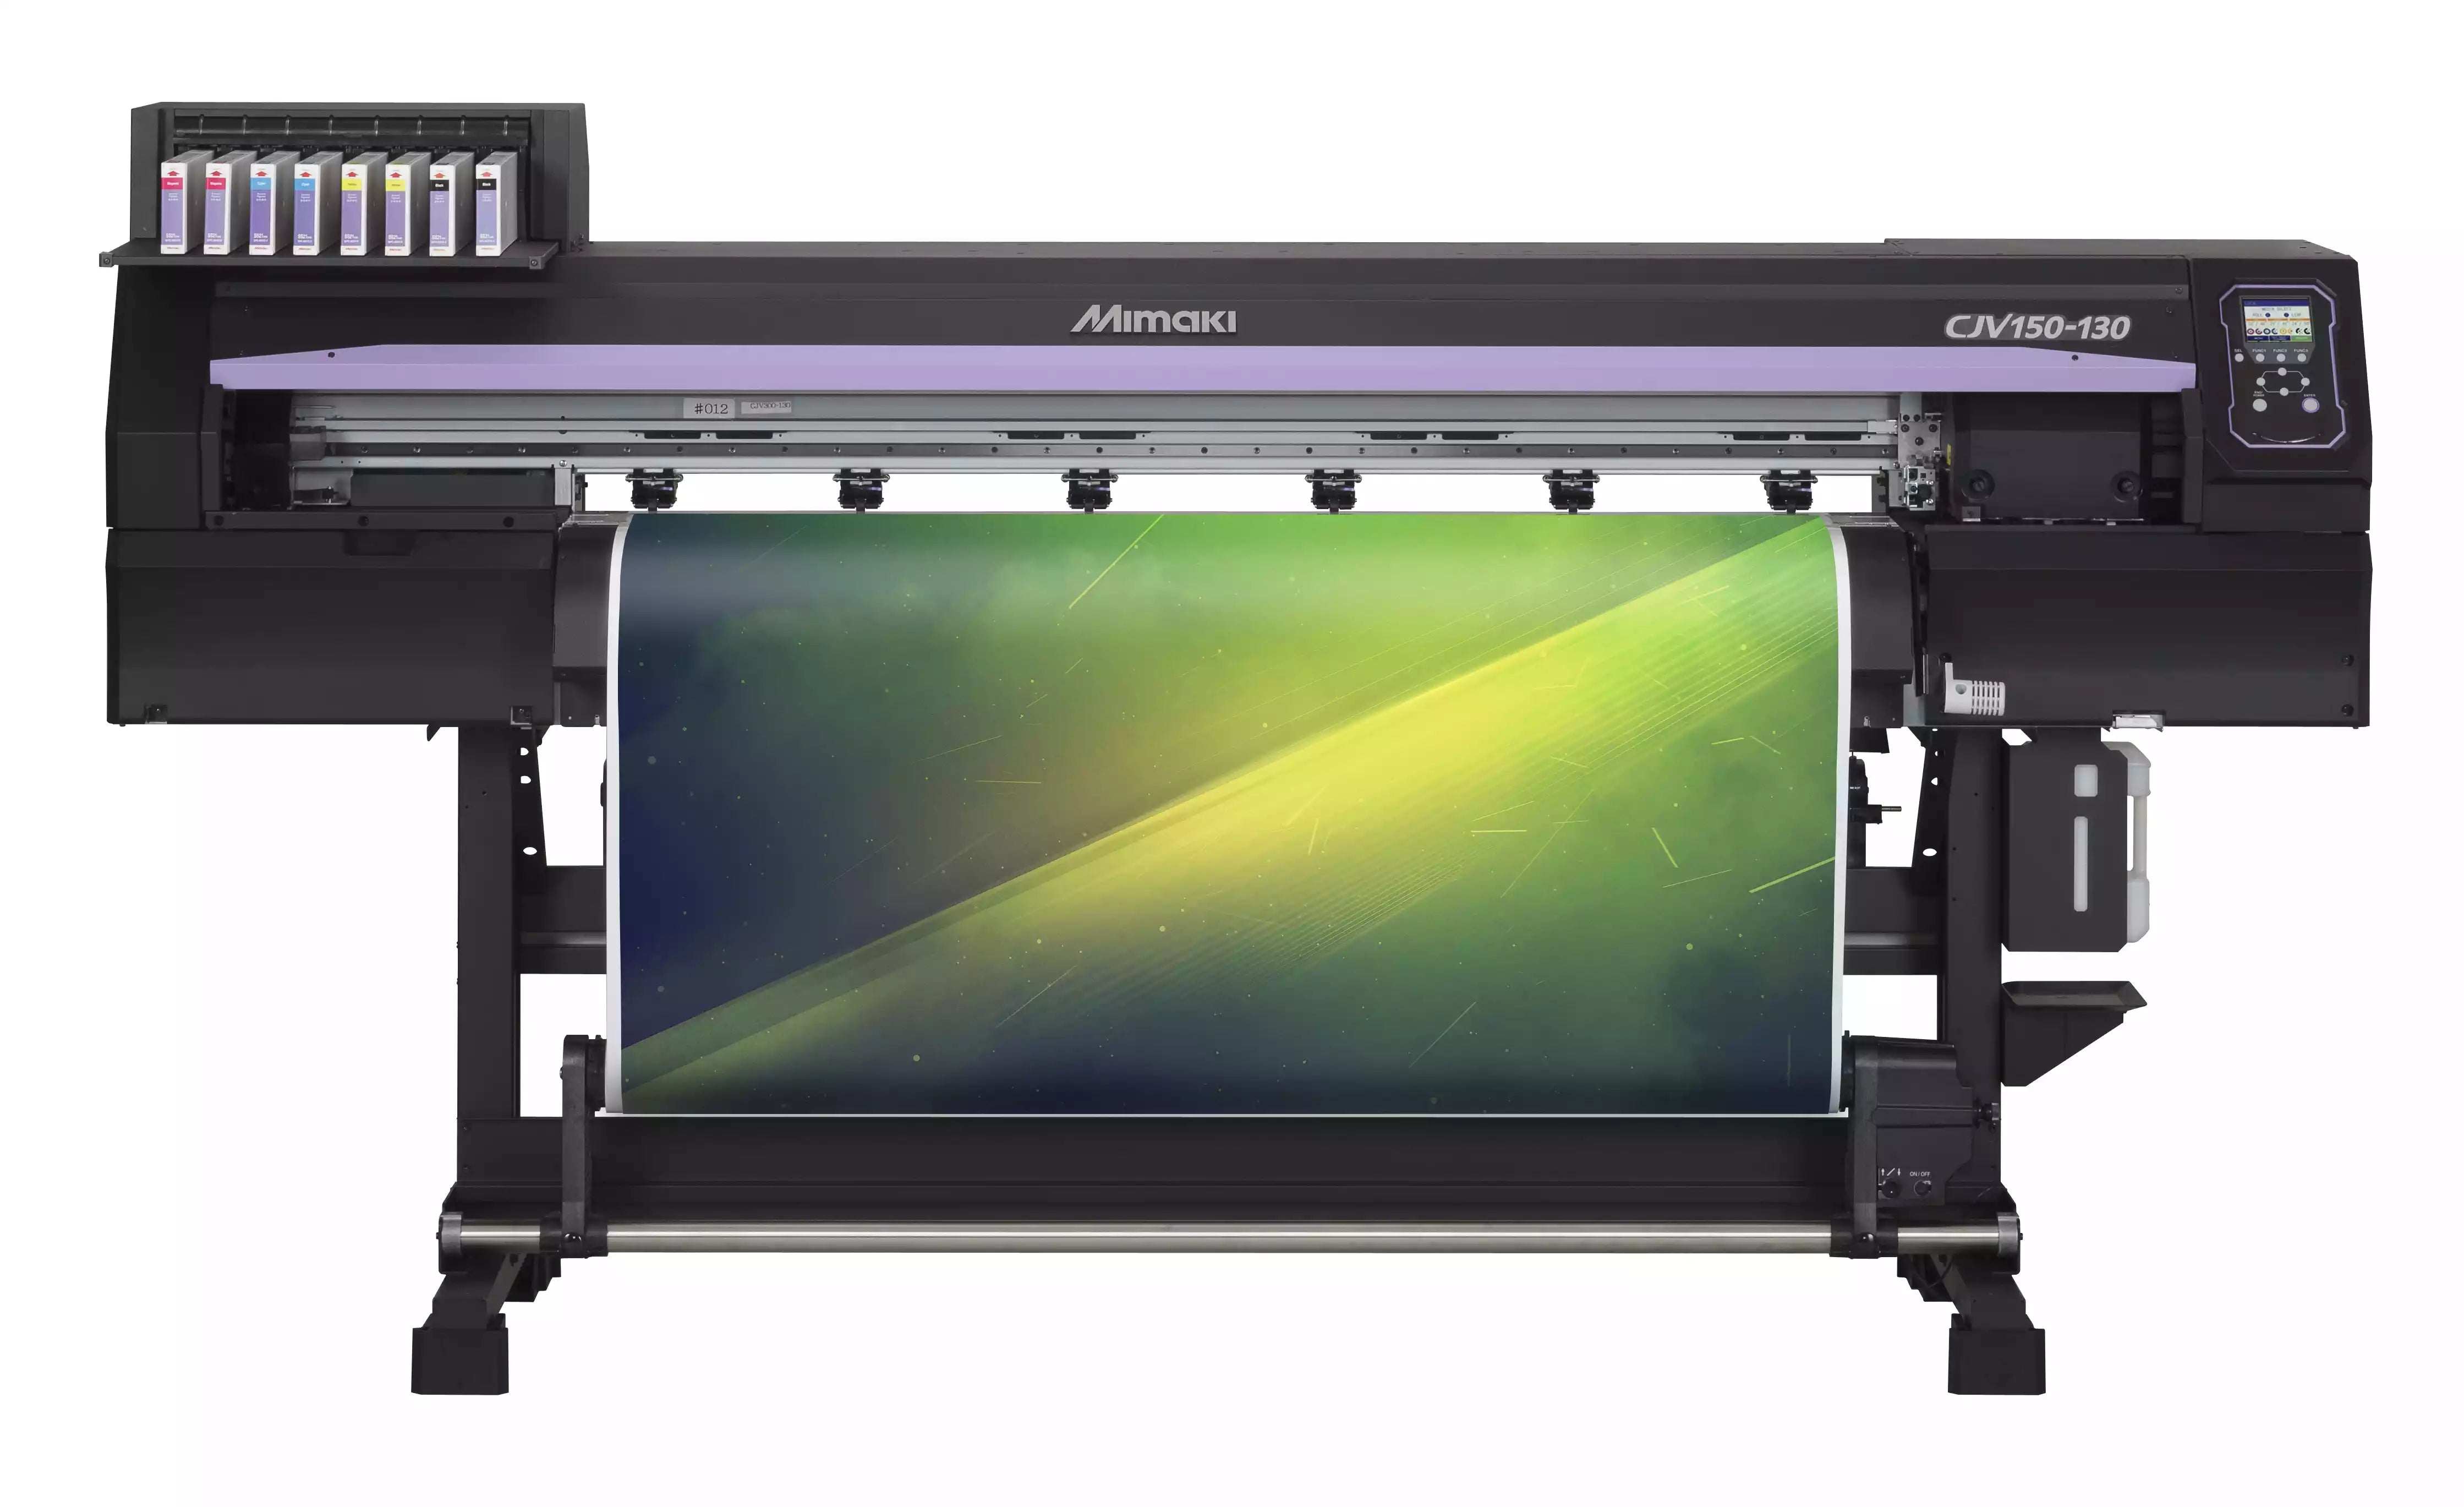 Mimaki CJV150-130 printer forward facing with printed color example